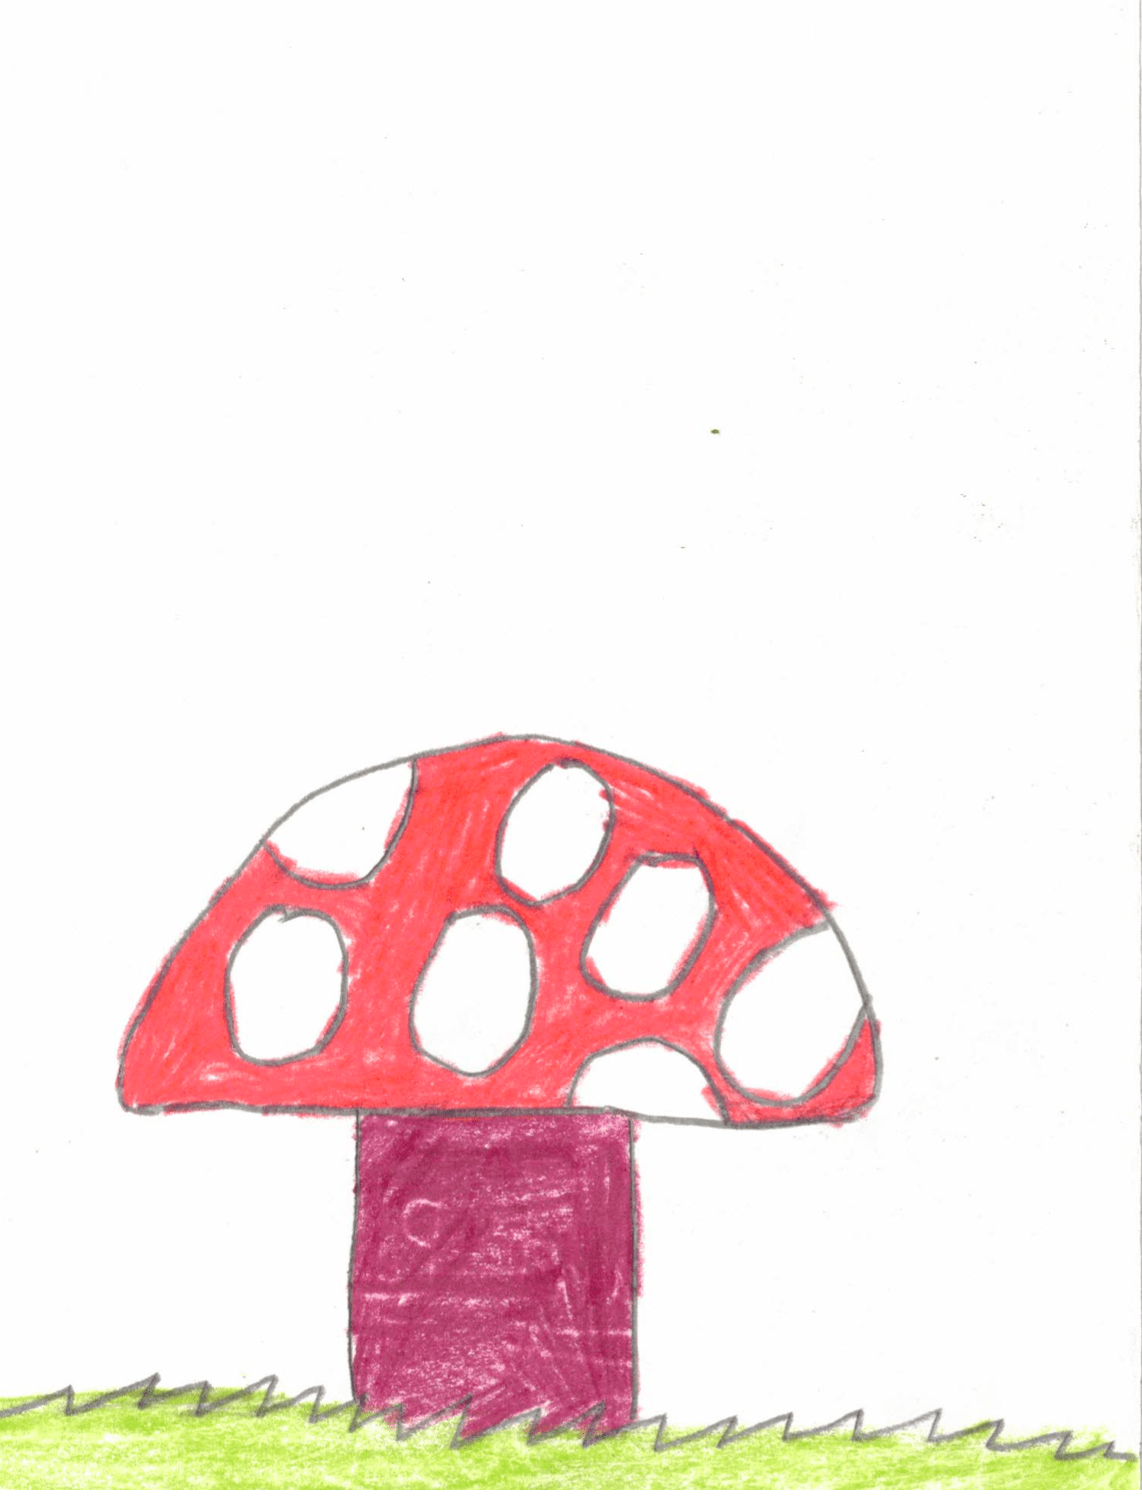 Rosewood+Calder red spotted mushroom on green grass illustration